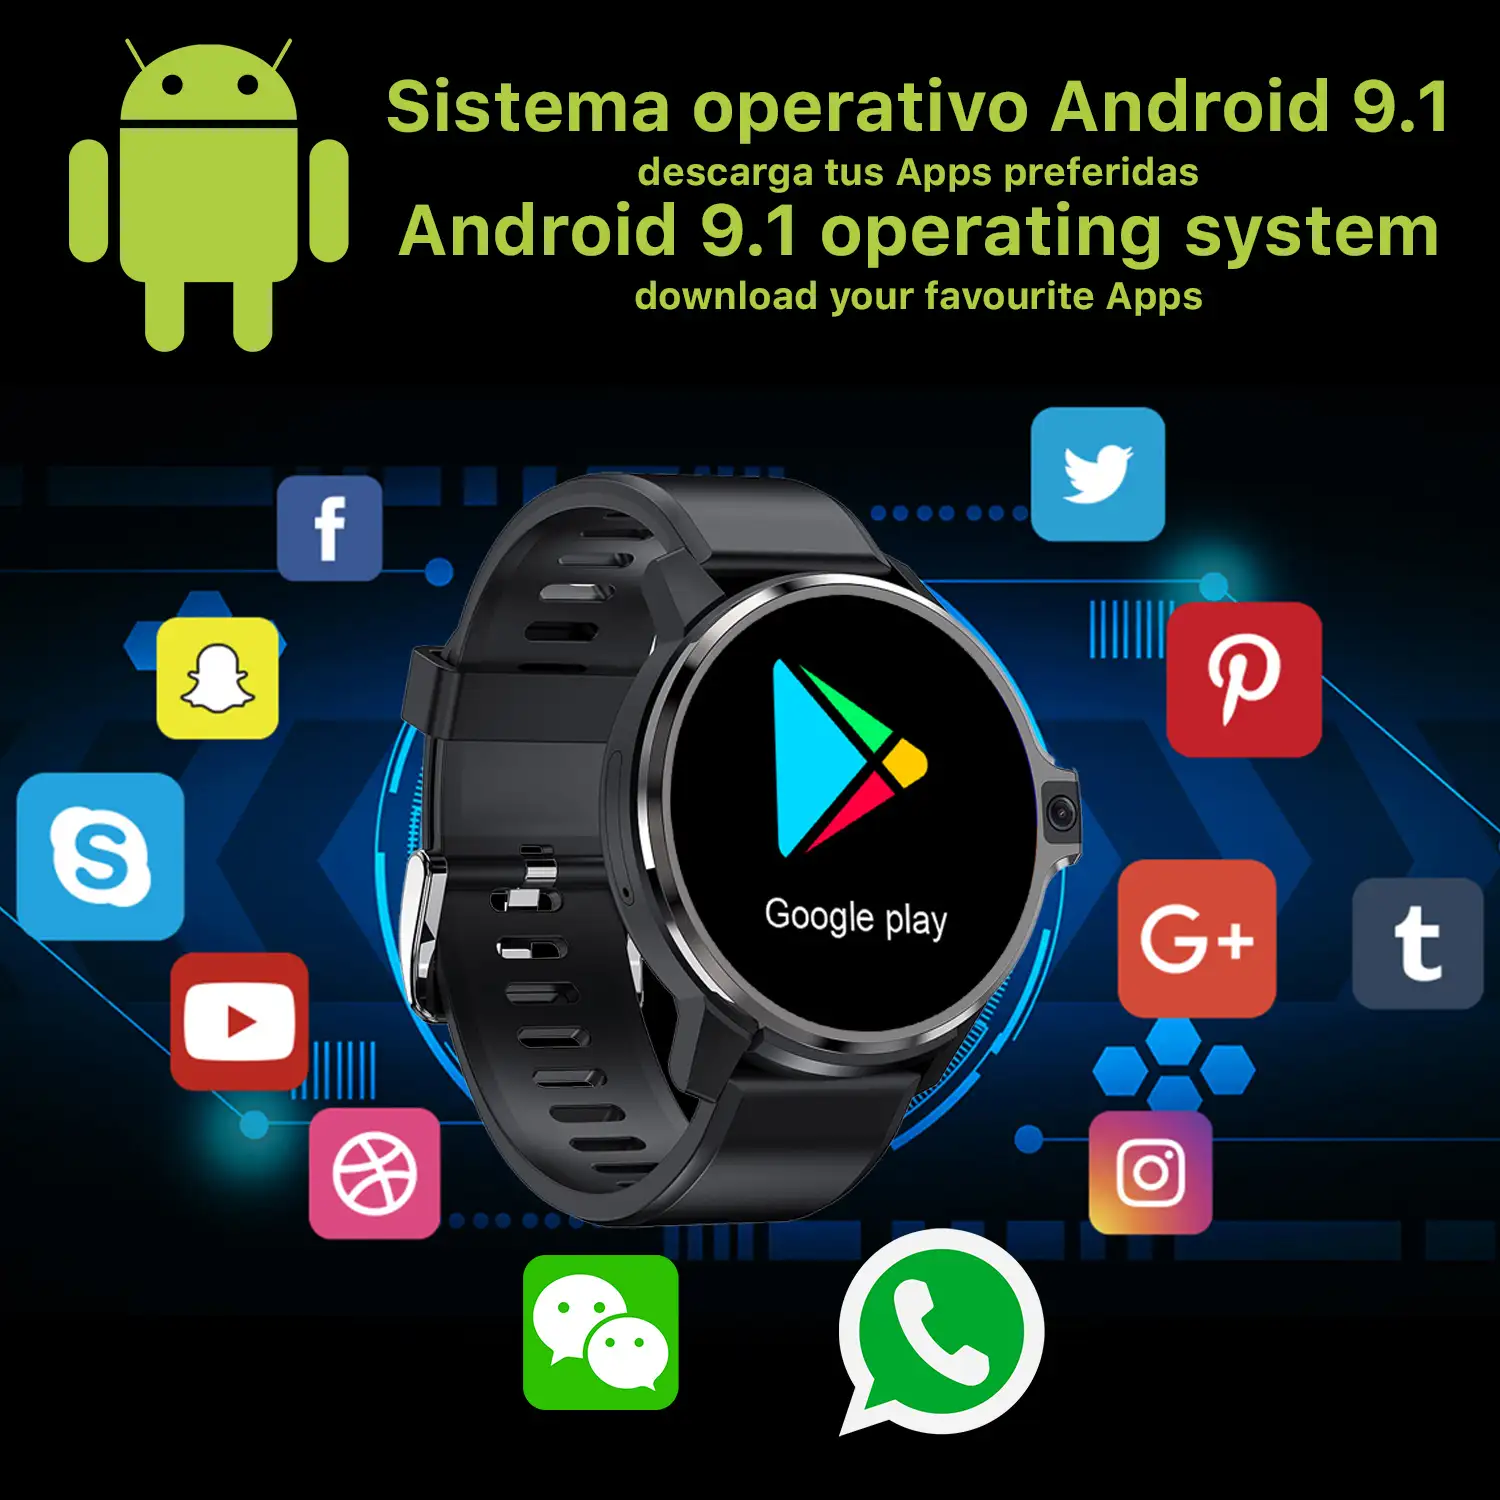 Smartwatch Phone M30 4G con SO Android 9.1, Quad Core, Wifi, GPS. Cámara de 5mpx incorporada. 1+16GB de memoria interna.